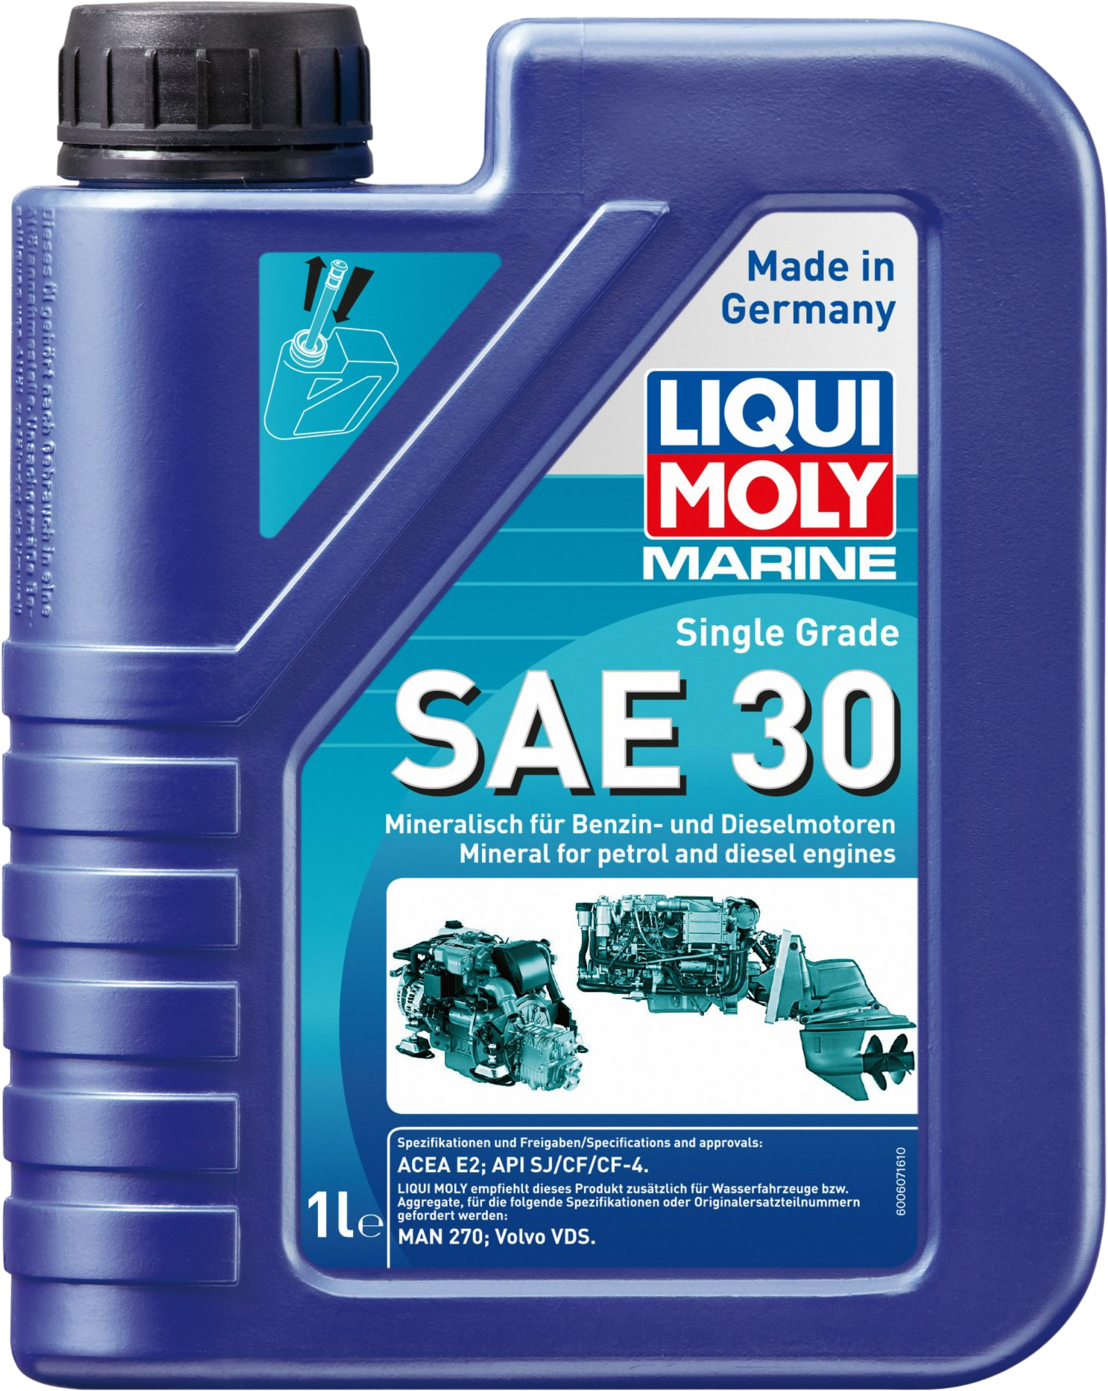 Liqui Moly Marine Single Grade SAE 30, 1 lt